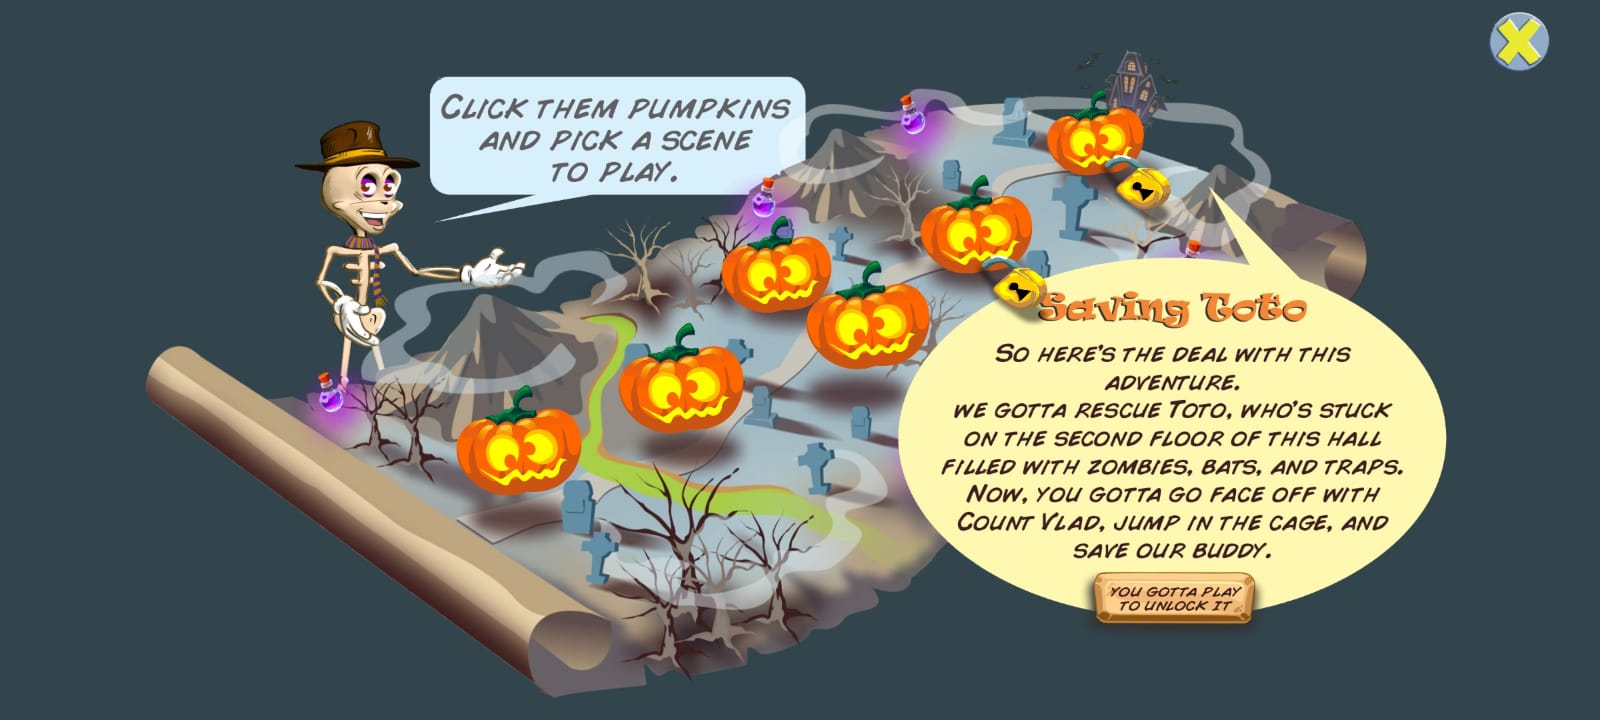 Baixar Pumpkins Quest para Android grátis.